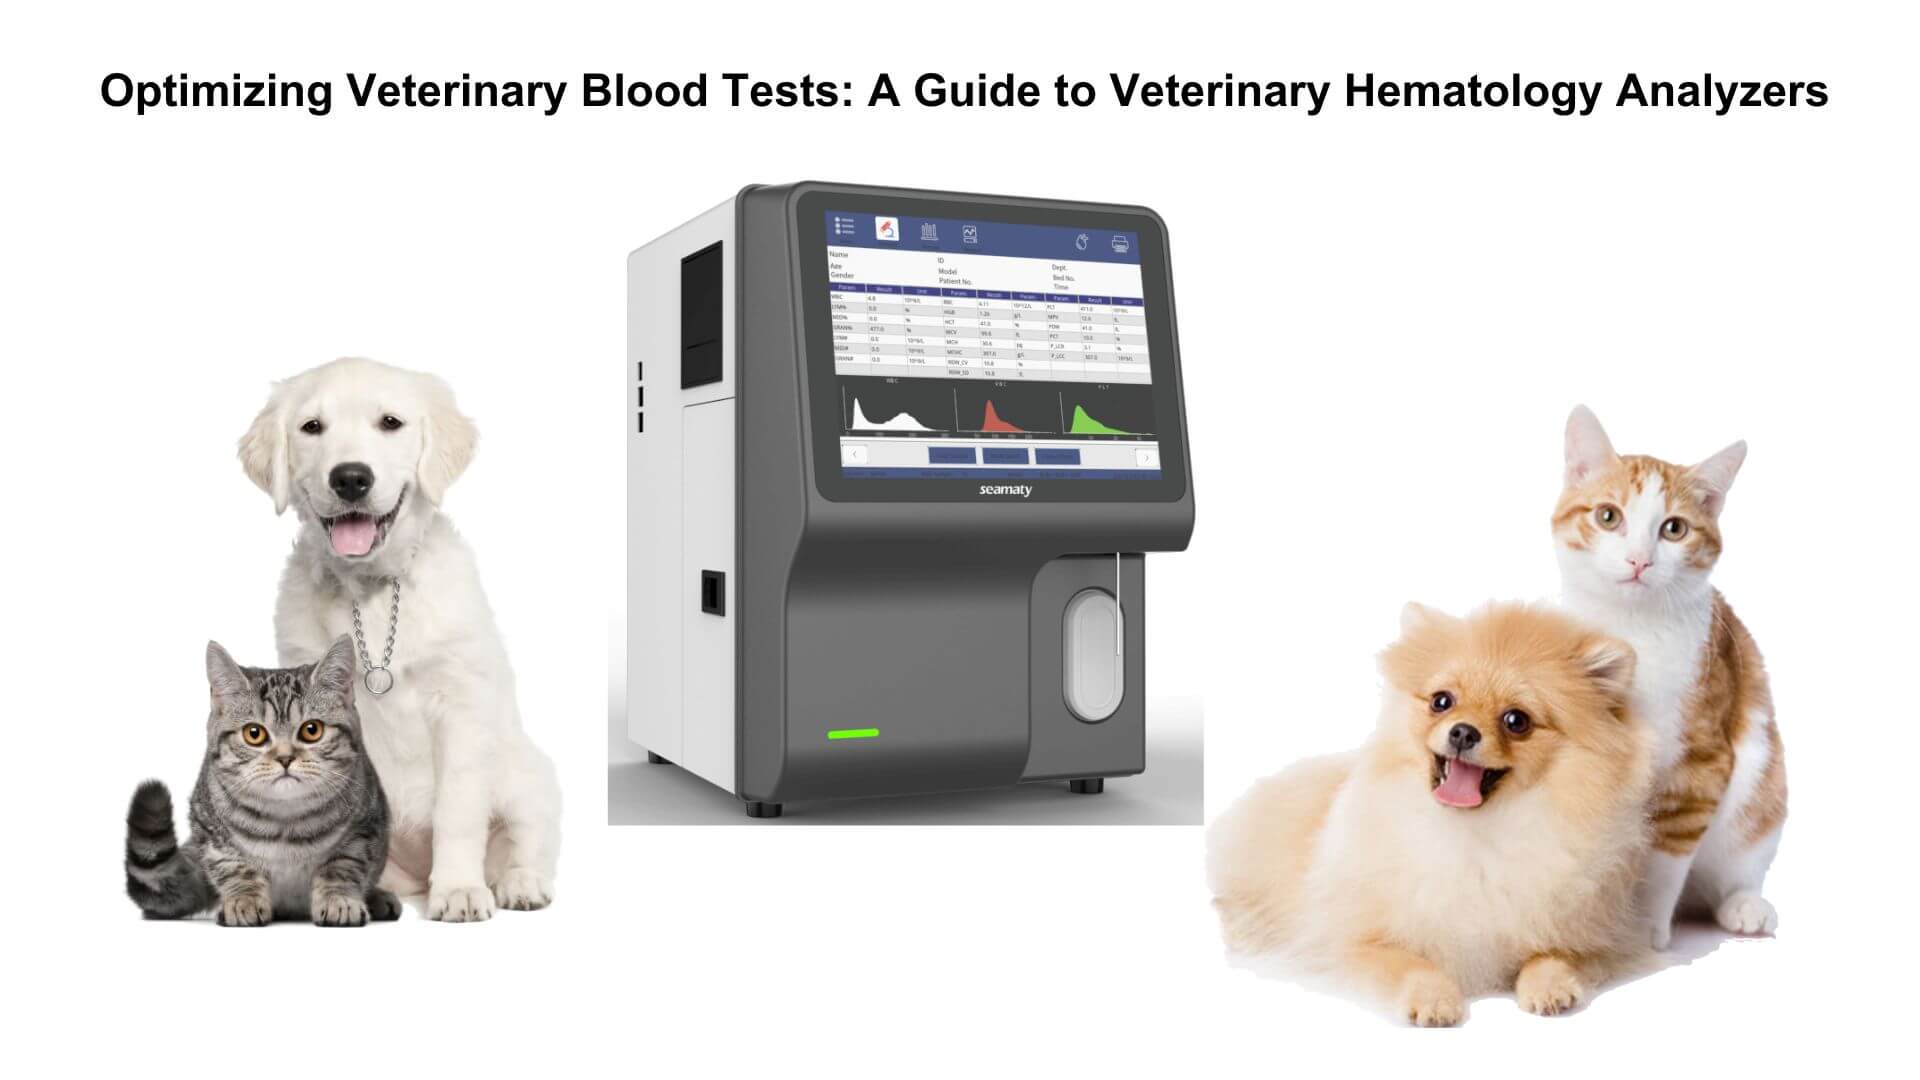 A Guide to Veterinary Hematology Analyzers